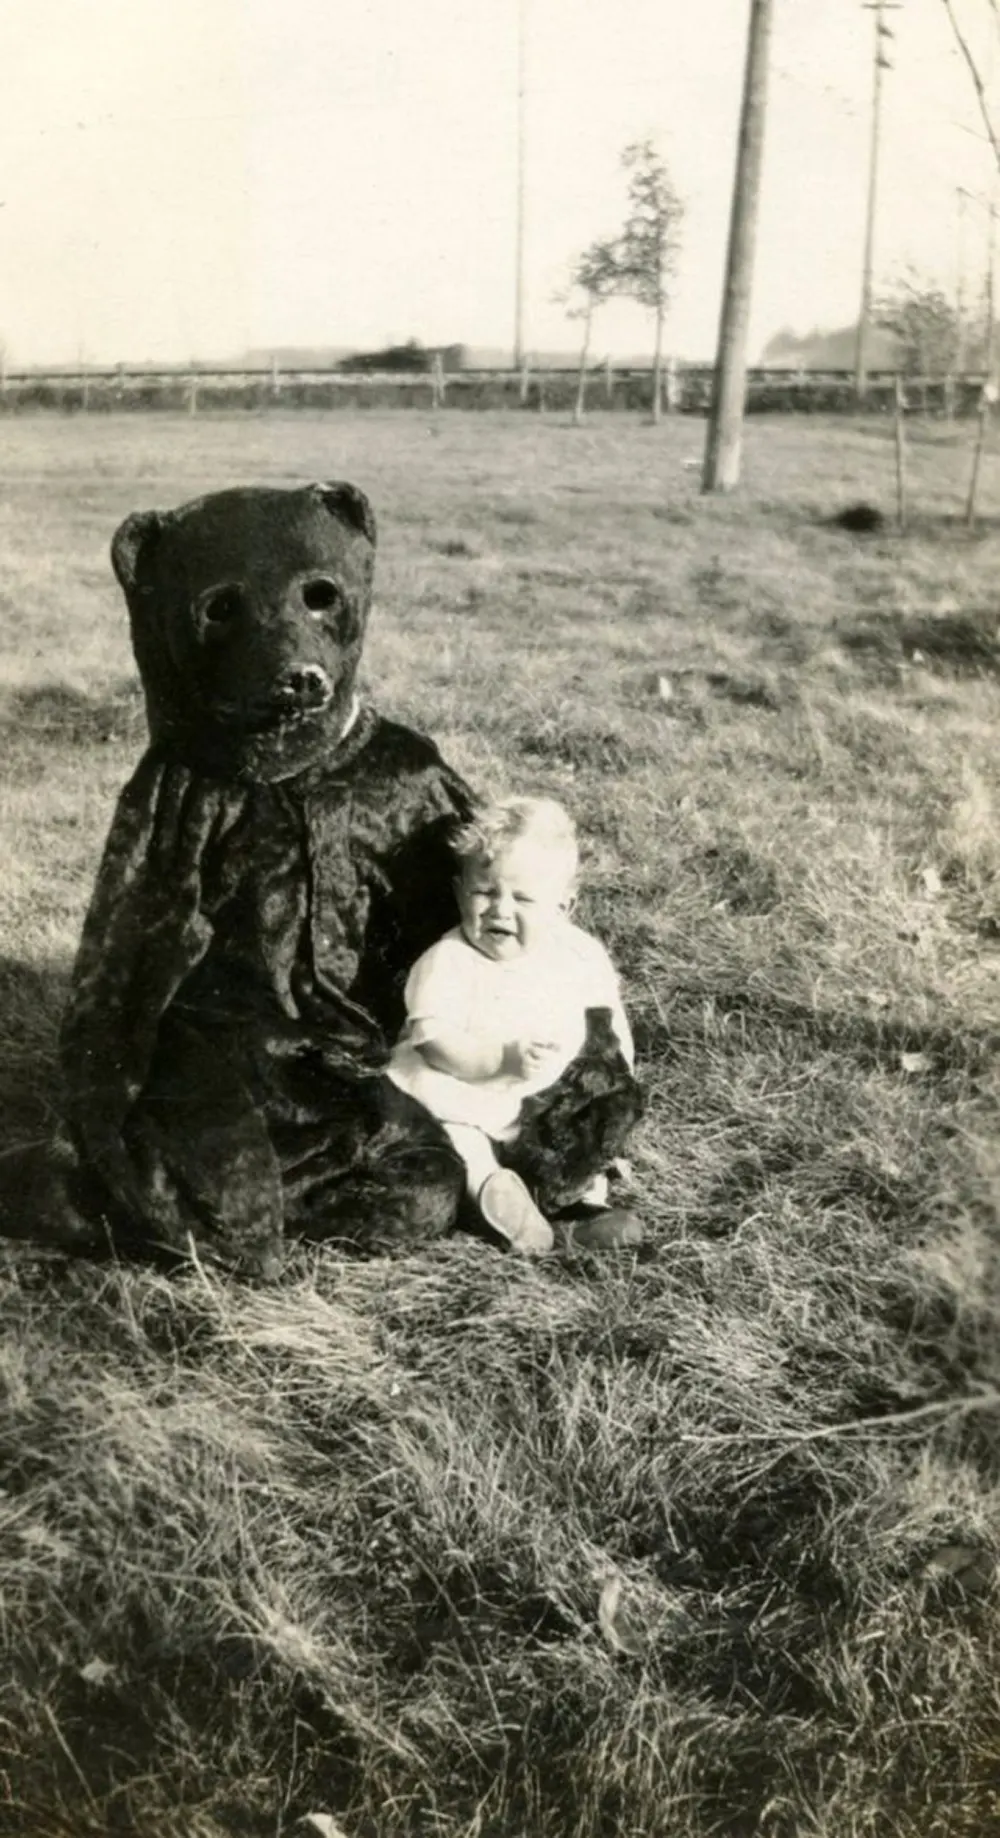 creepy vintage halloween photos